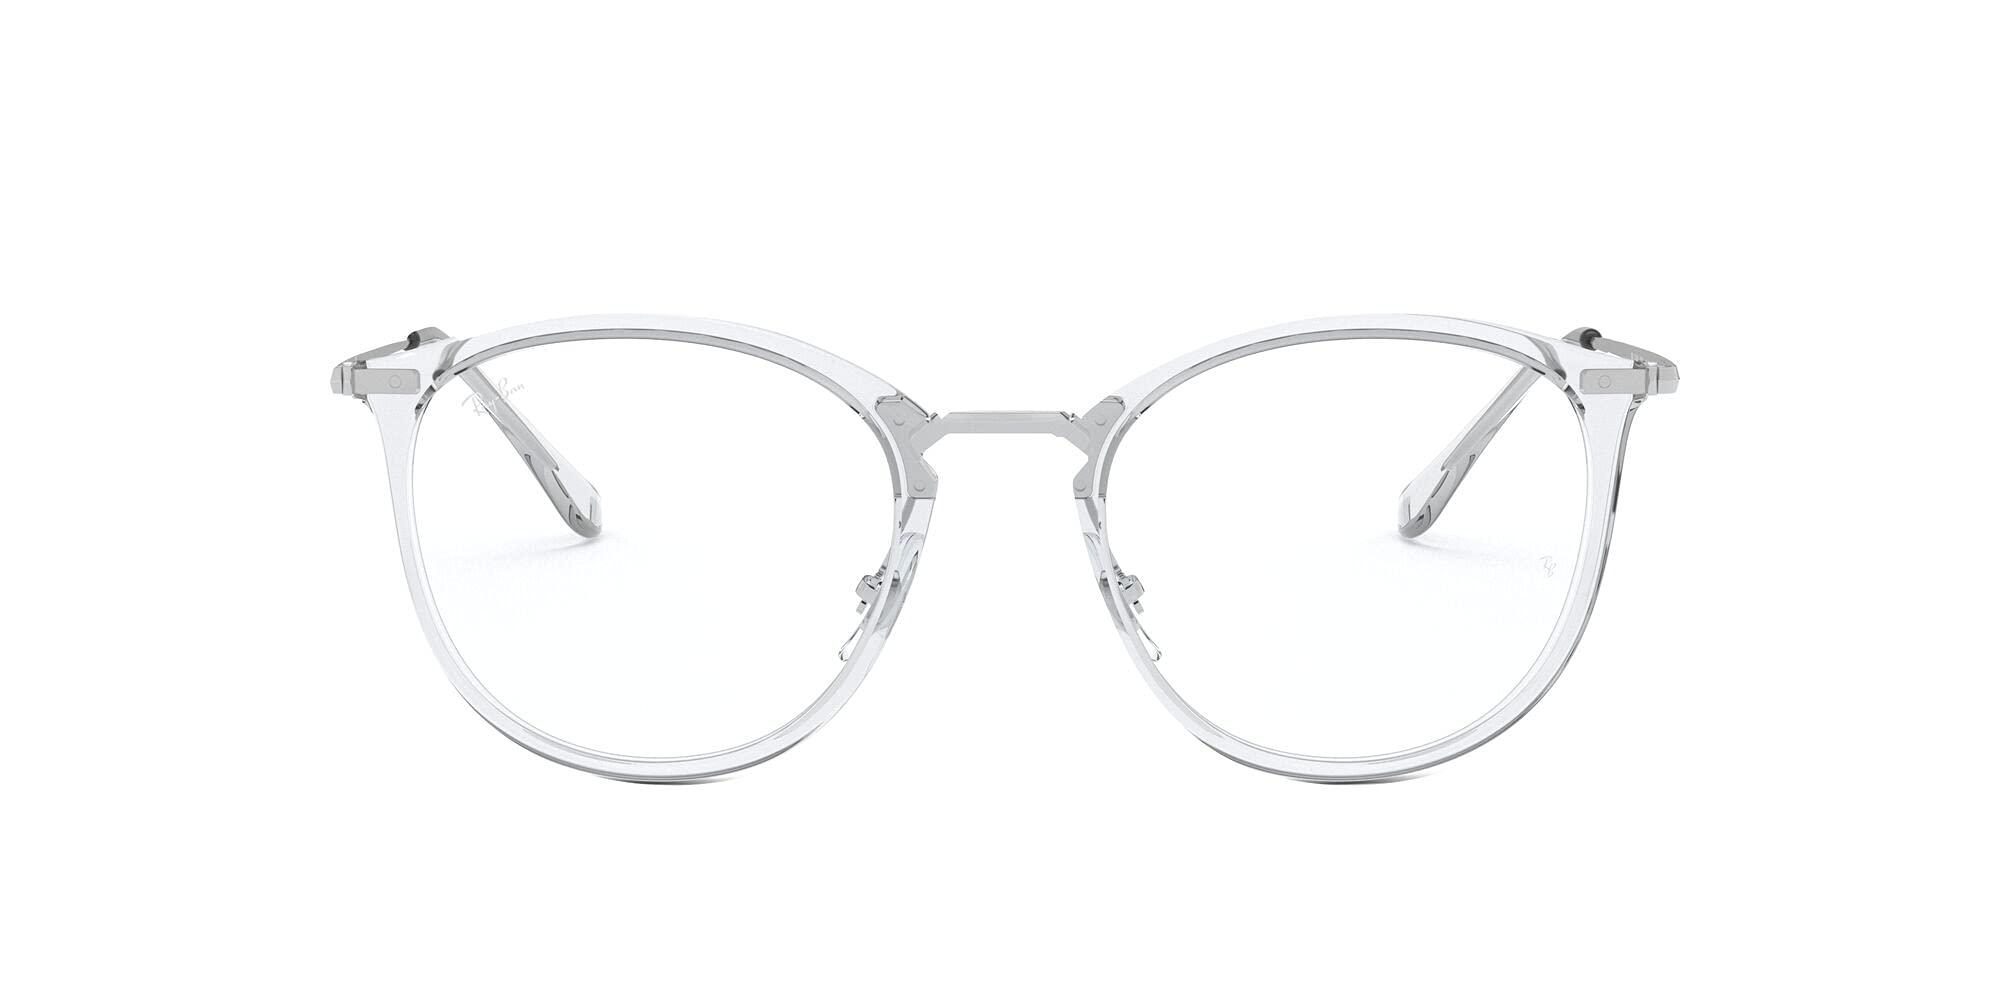 Ray-Ban Rx7140 Square Prescription Eyeglass Frames - Save 3% - Lyst